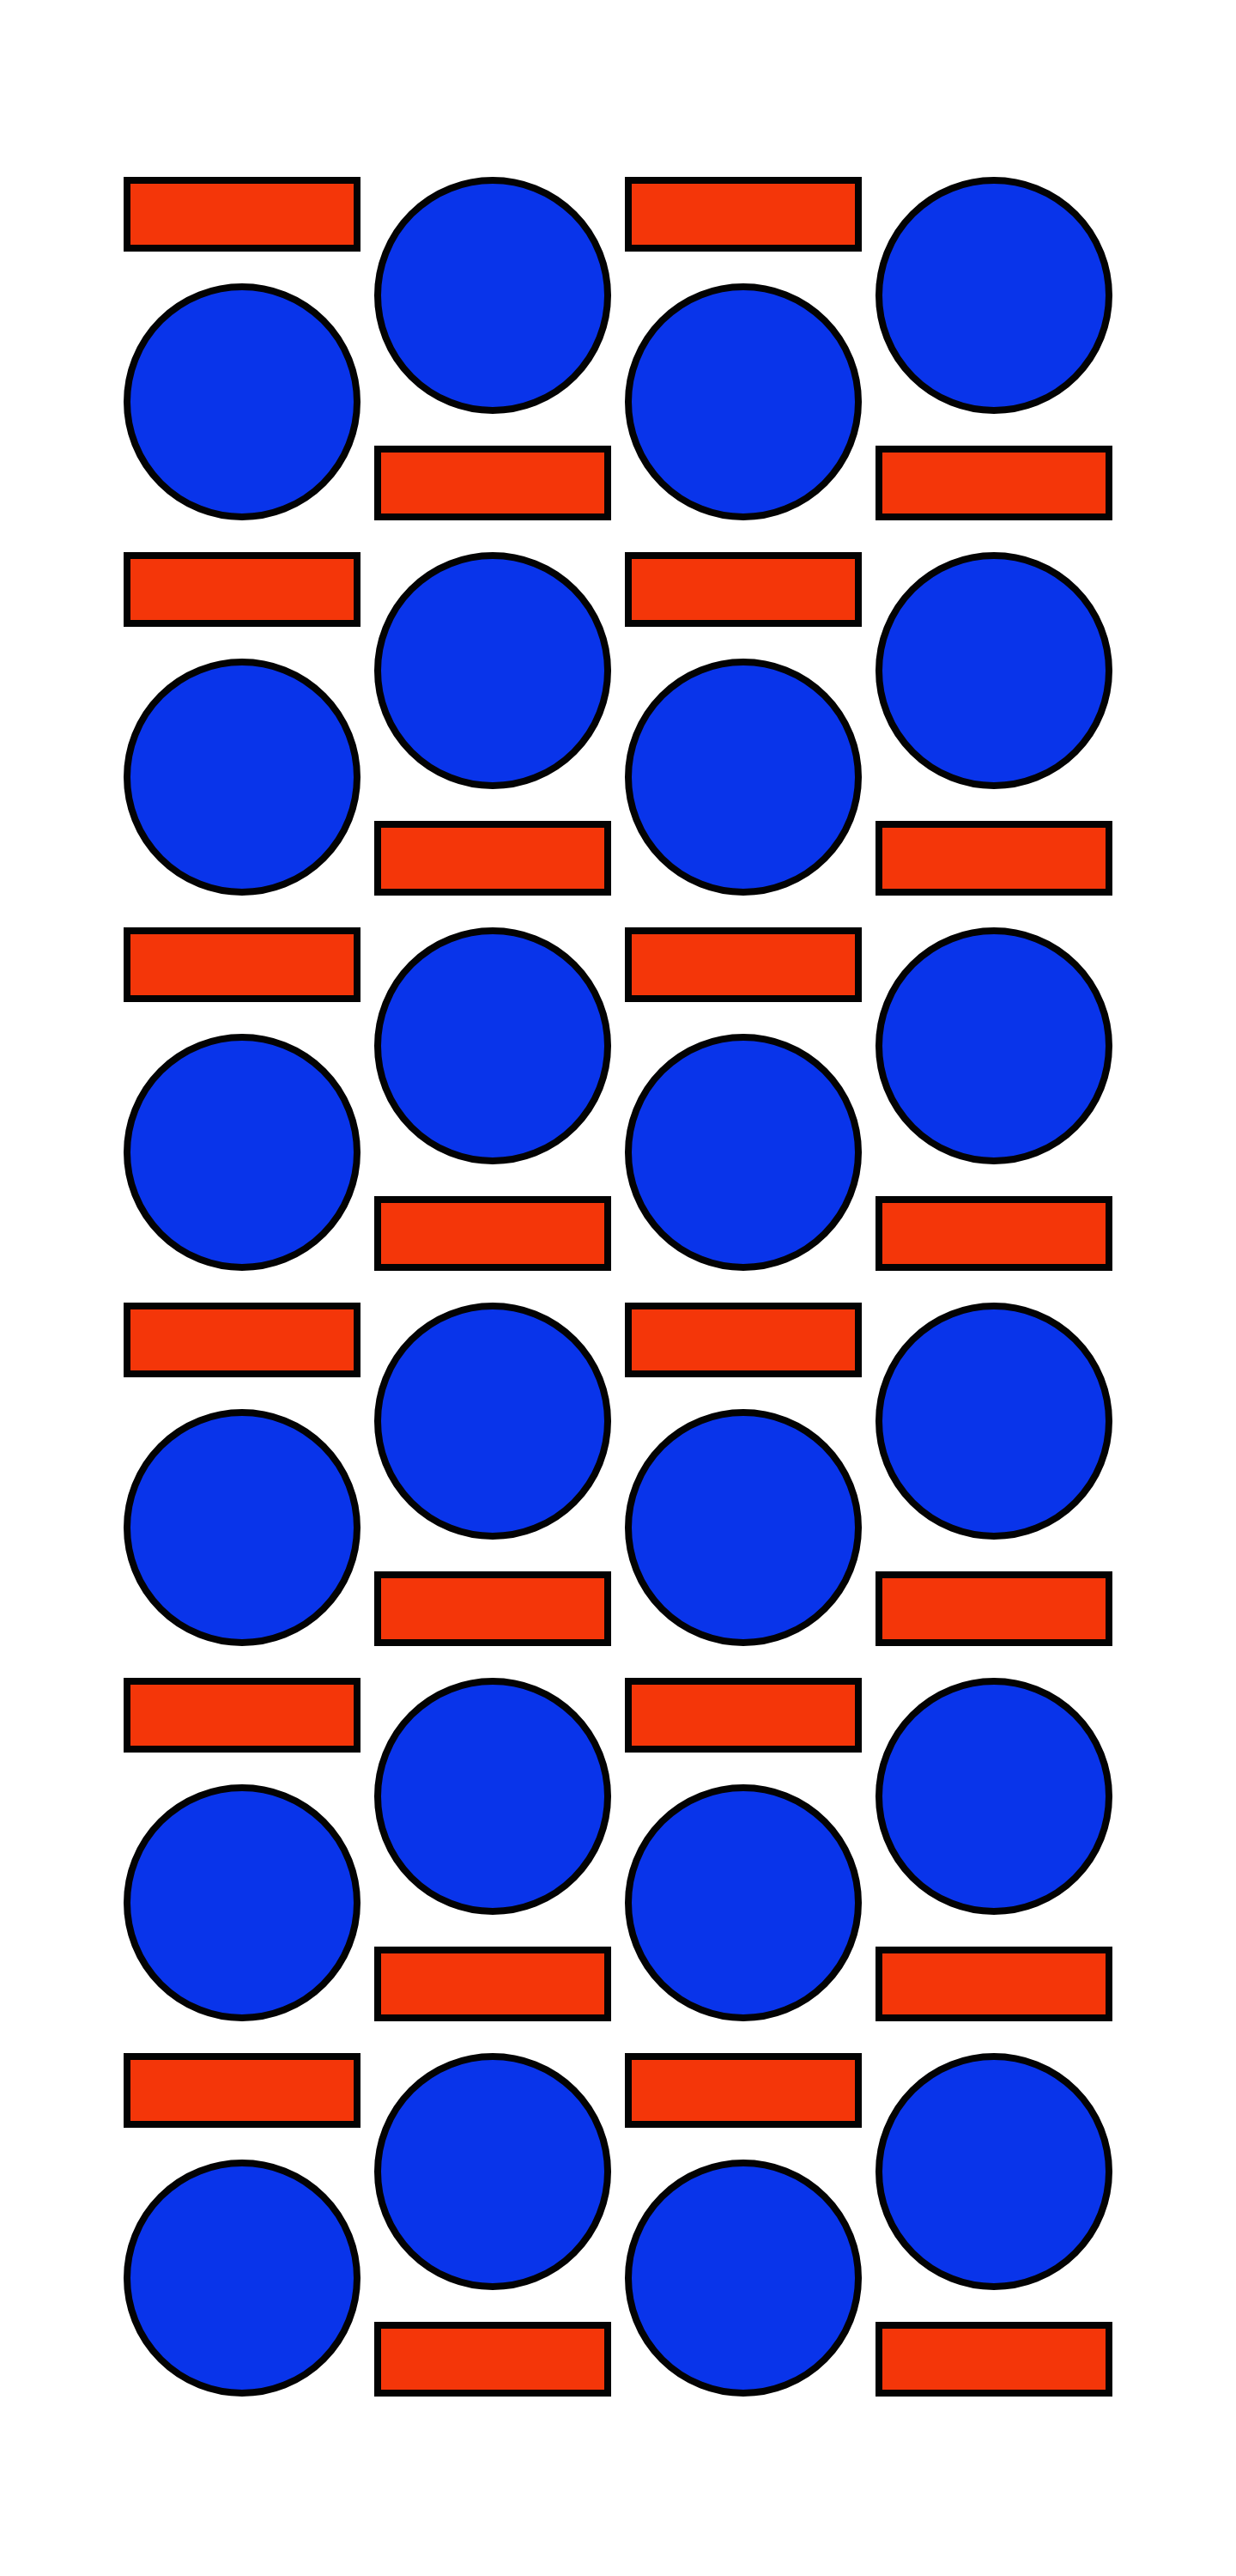 grid images